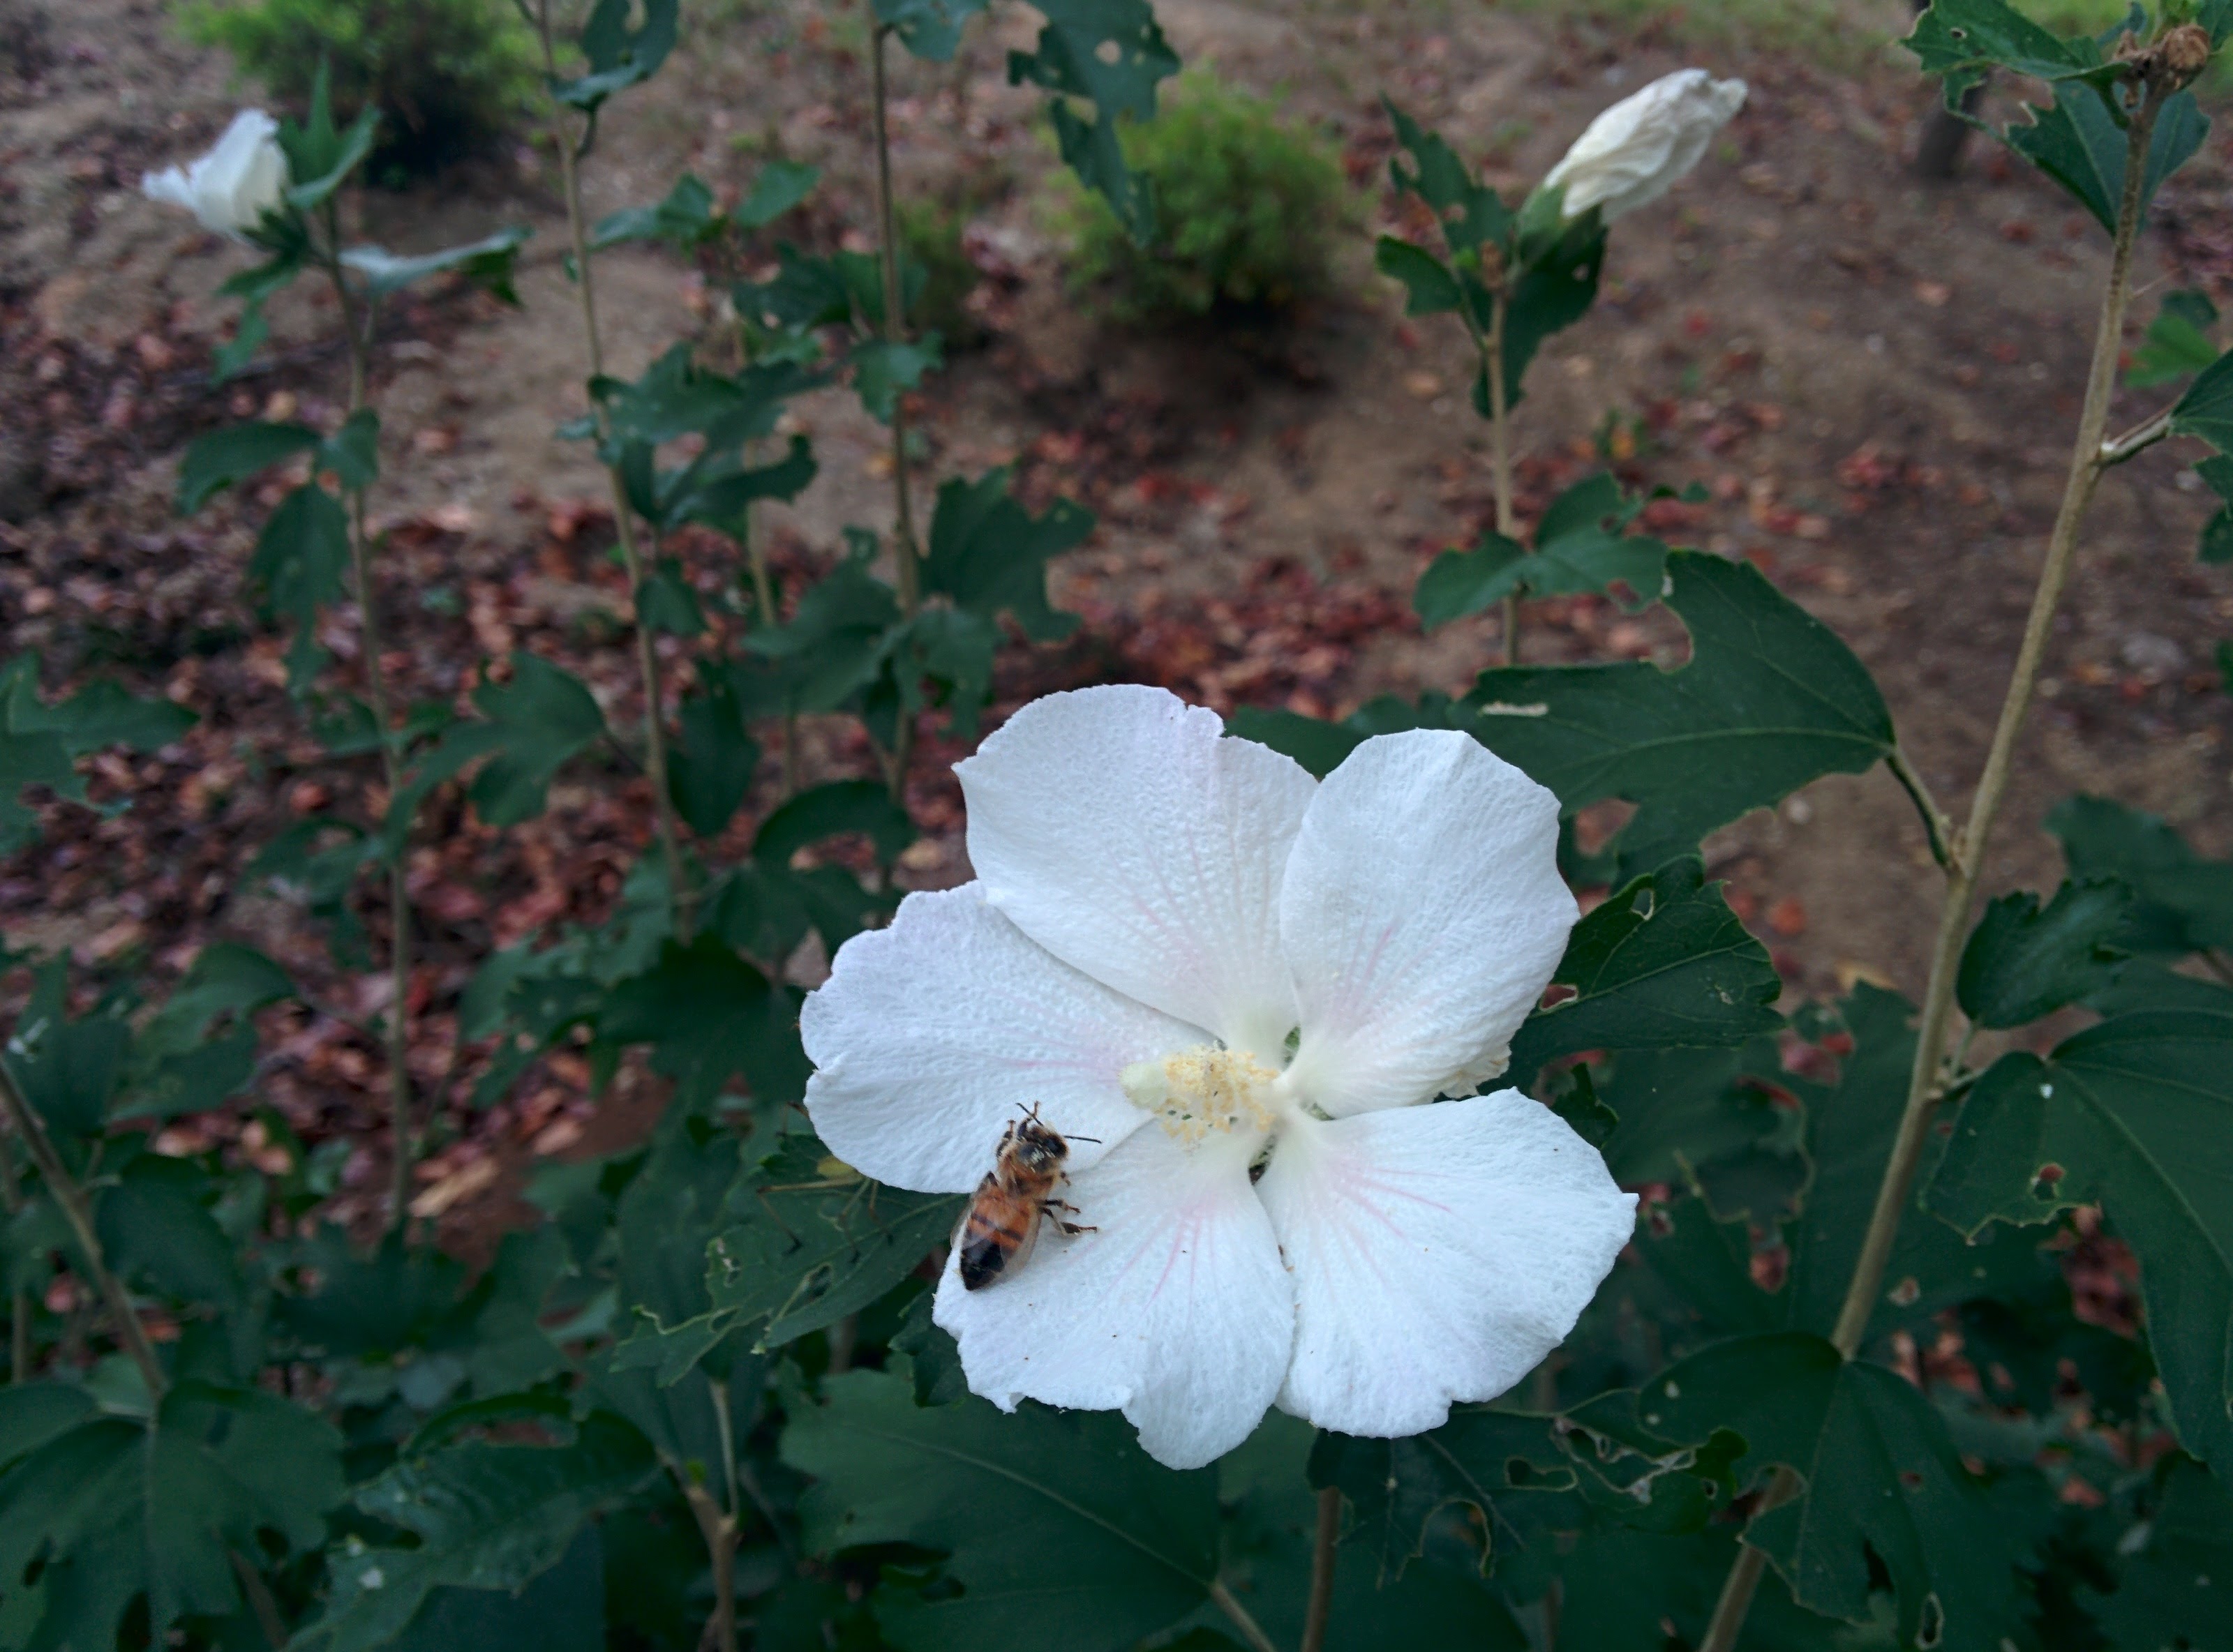 IMG_20150923_161132.jpg 하얀 무궁화 꽃을 찾은 꿀벌